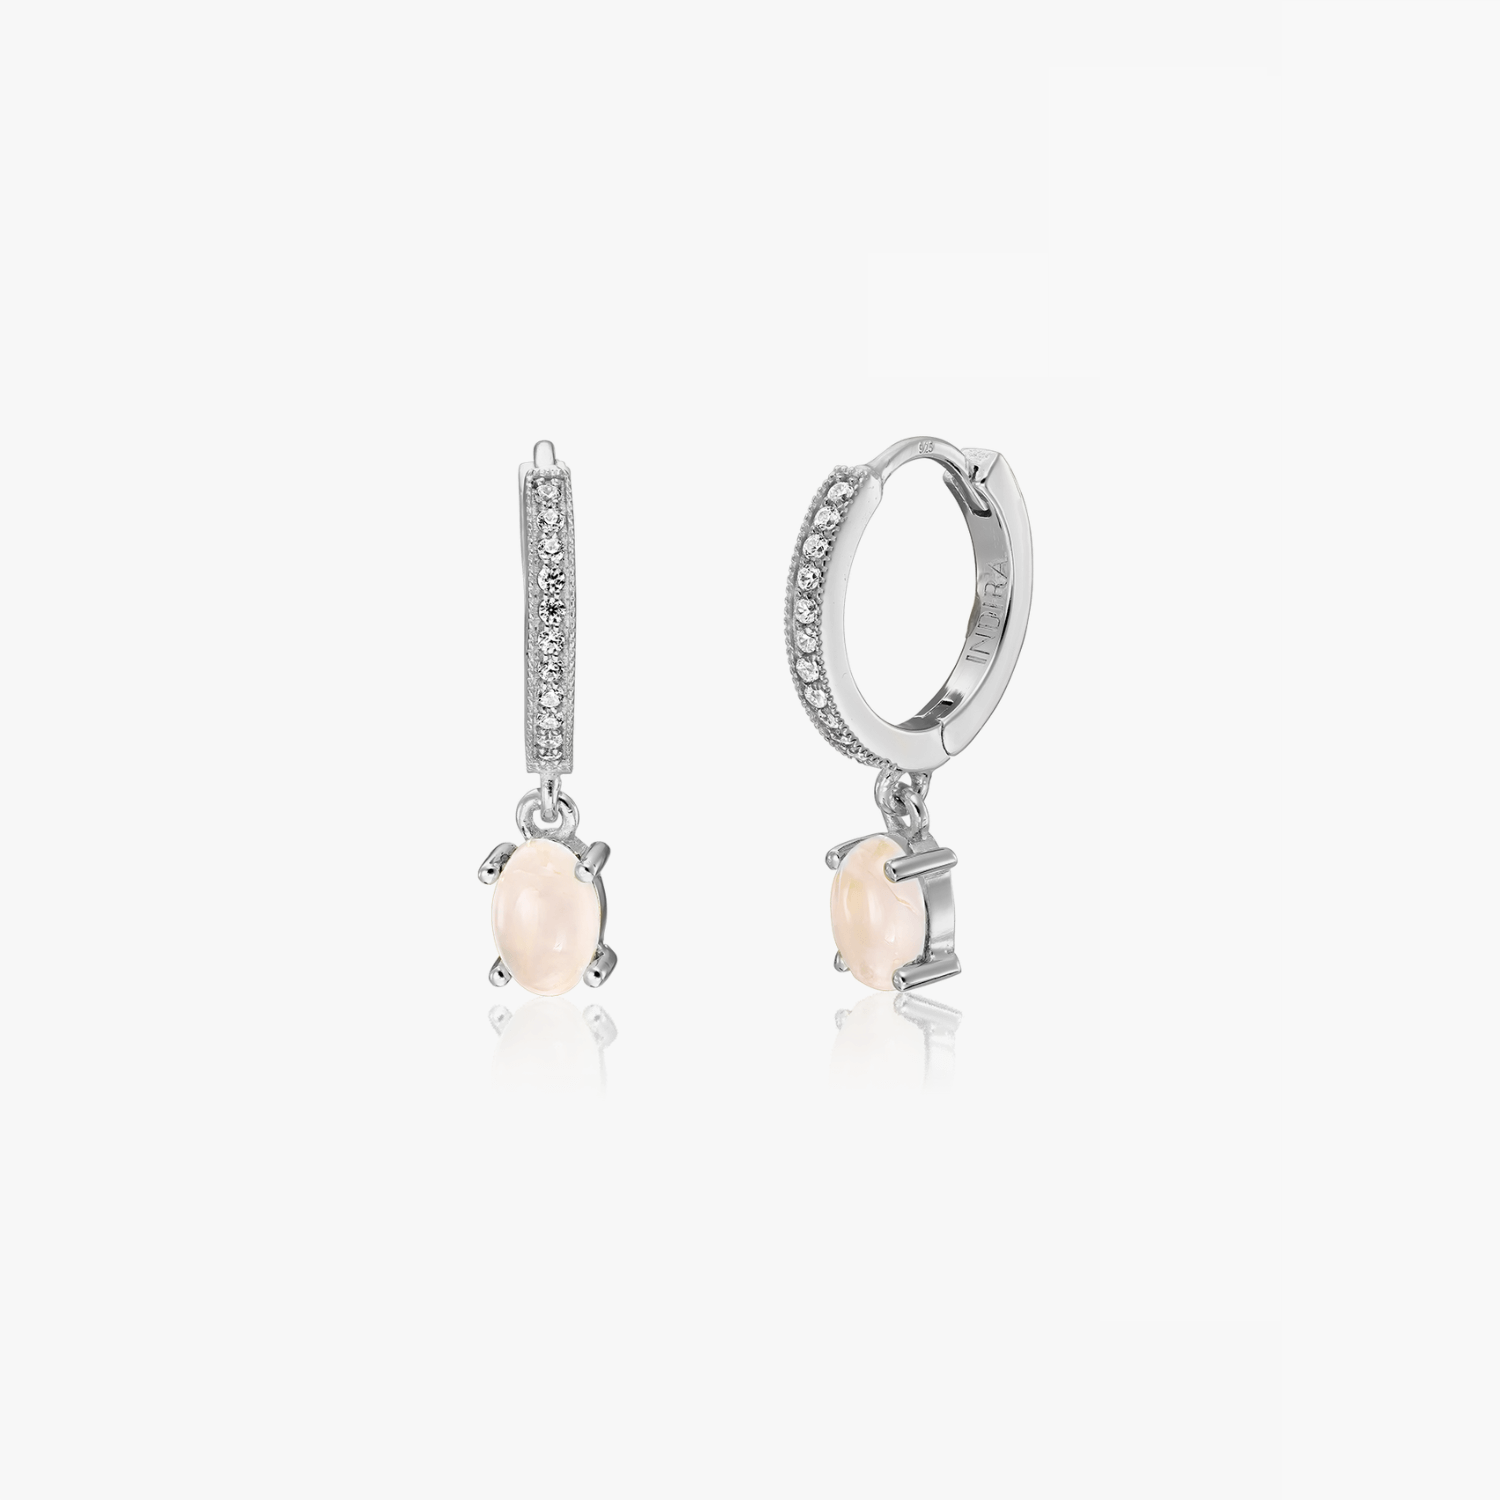 Huggies Gem Silver Earrings - Rose Quartz